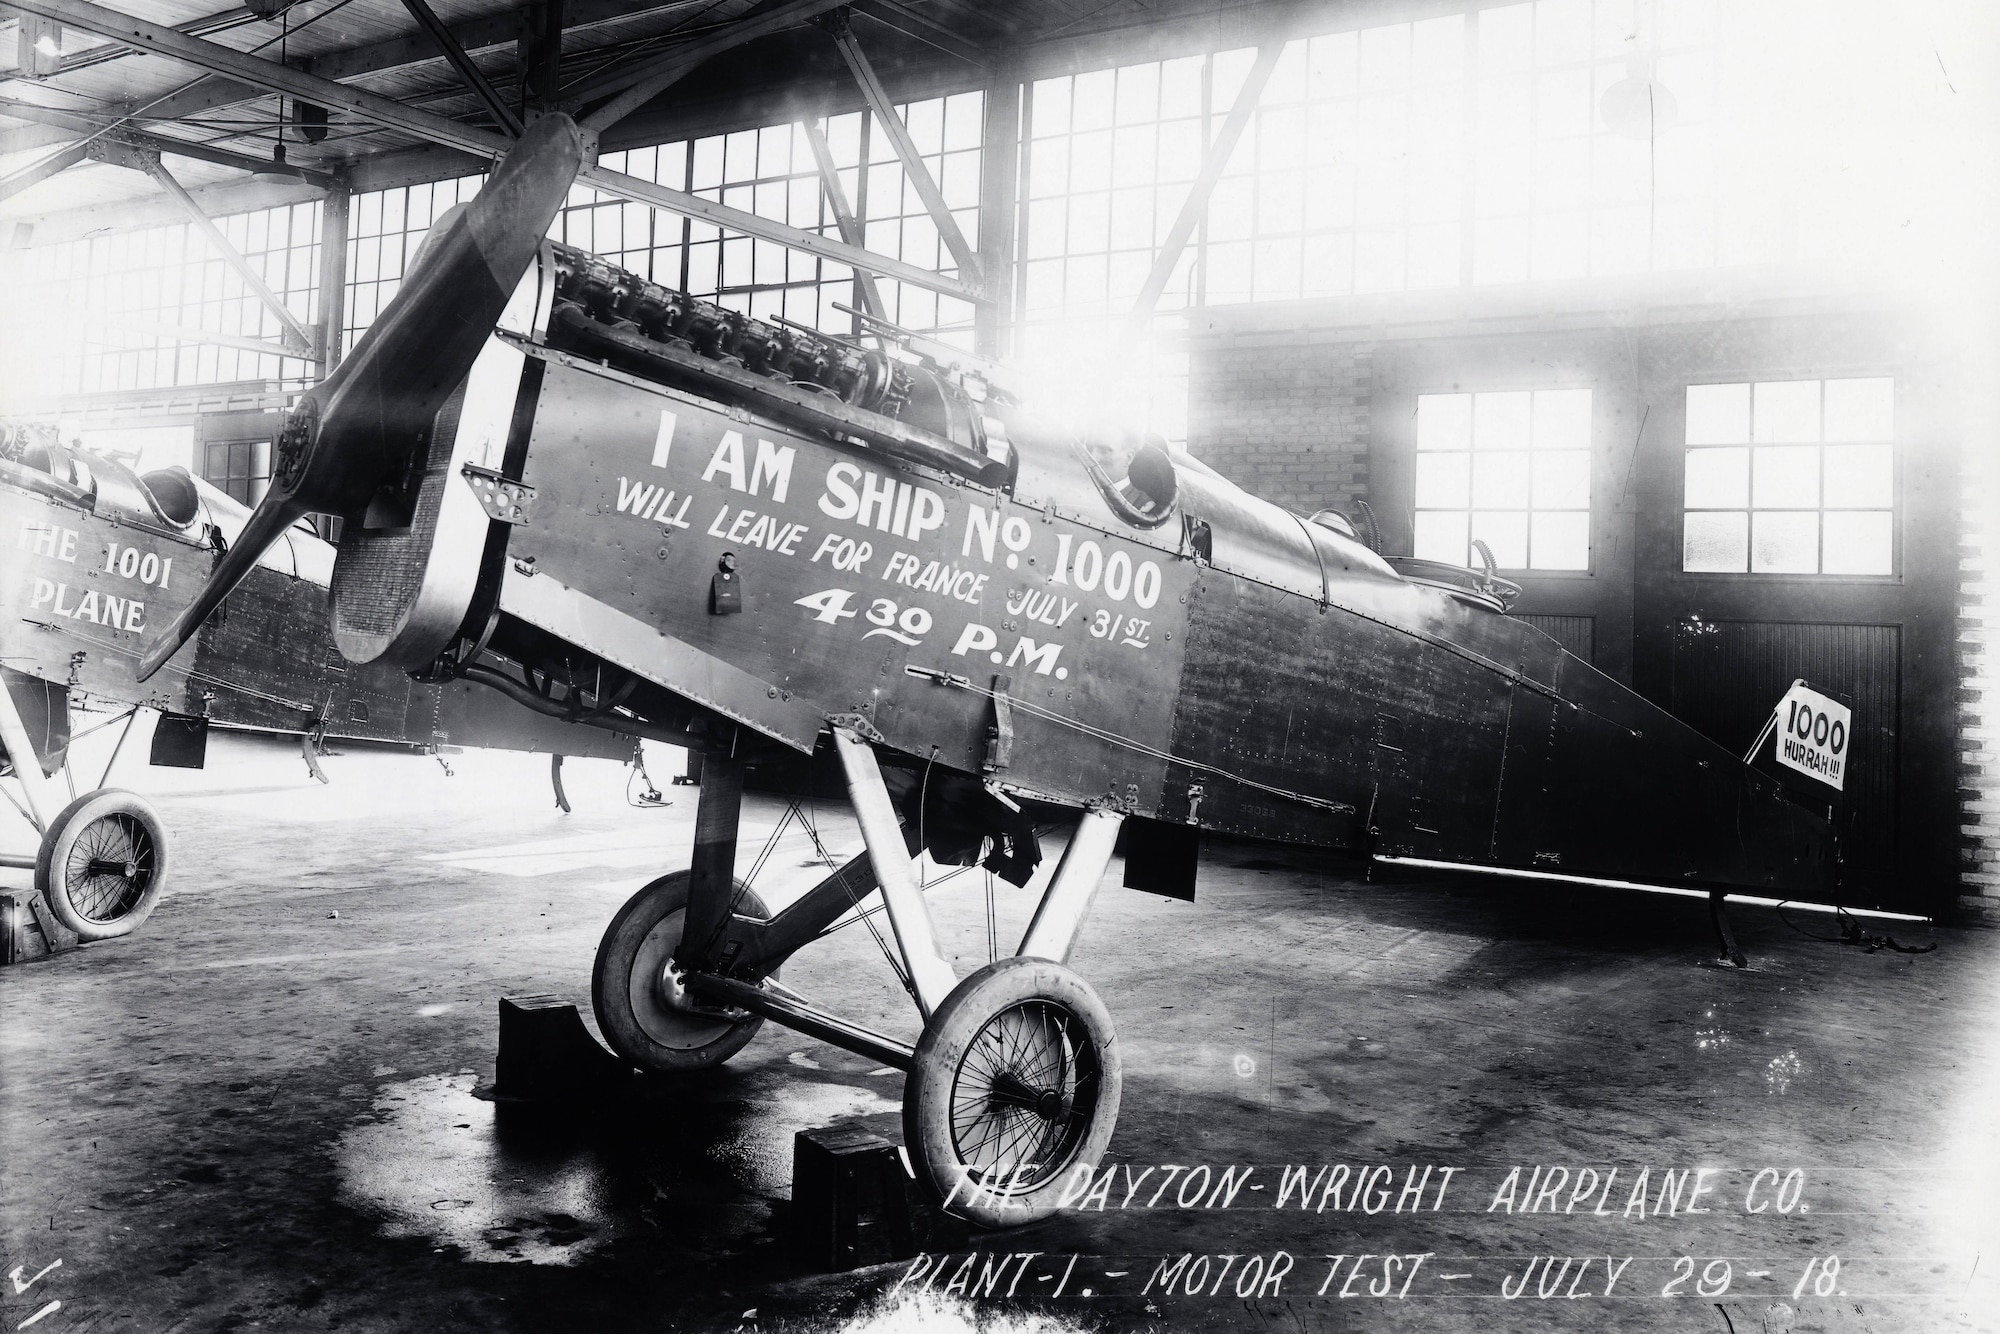 DAYTON, Ohio -- The 1000th DH-4 built at the Dayton-Wright Company plant.